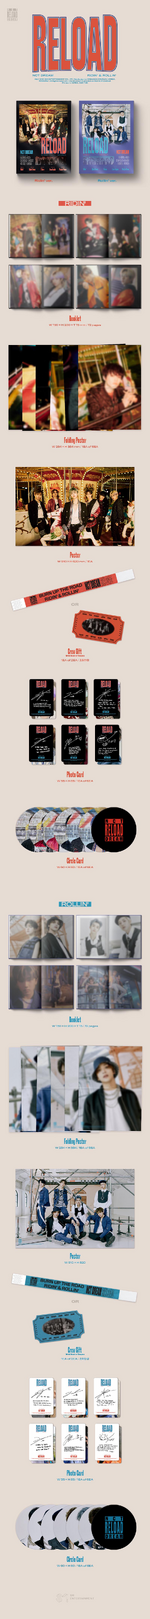 NCT Dream Reload album contents